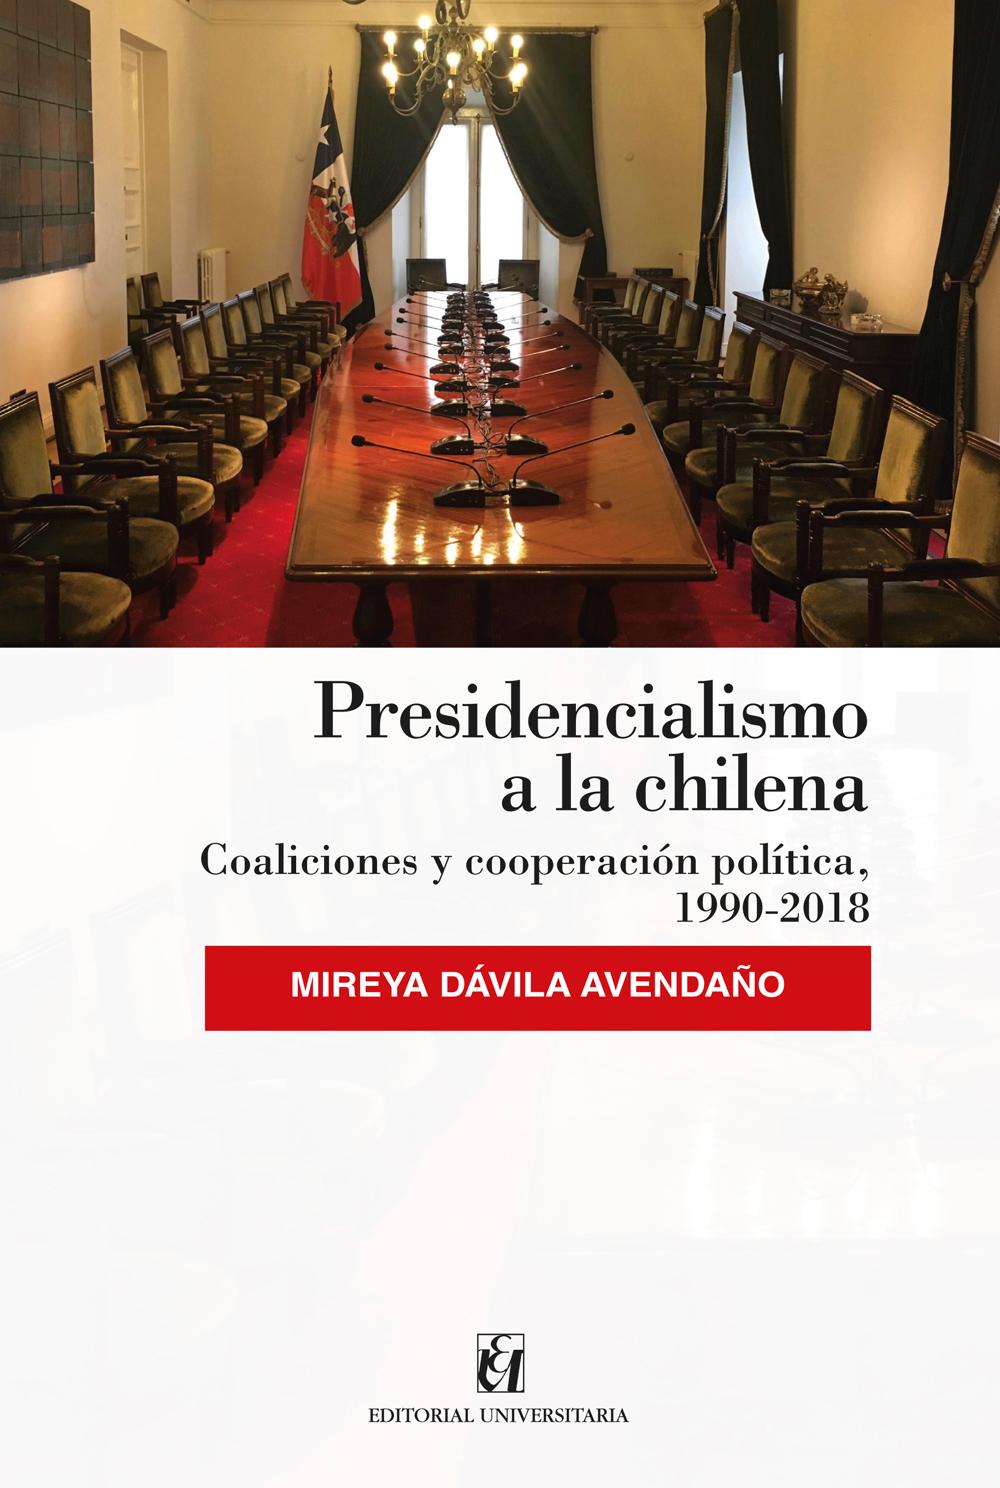 Profesora Mireya Dávila lanzó libro sobre el presidencialismo en Chile